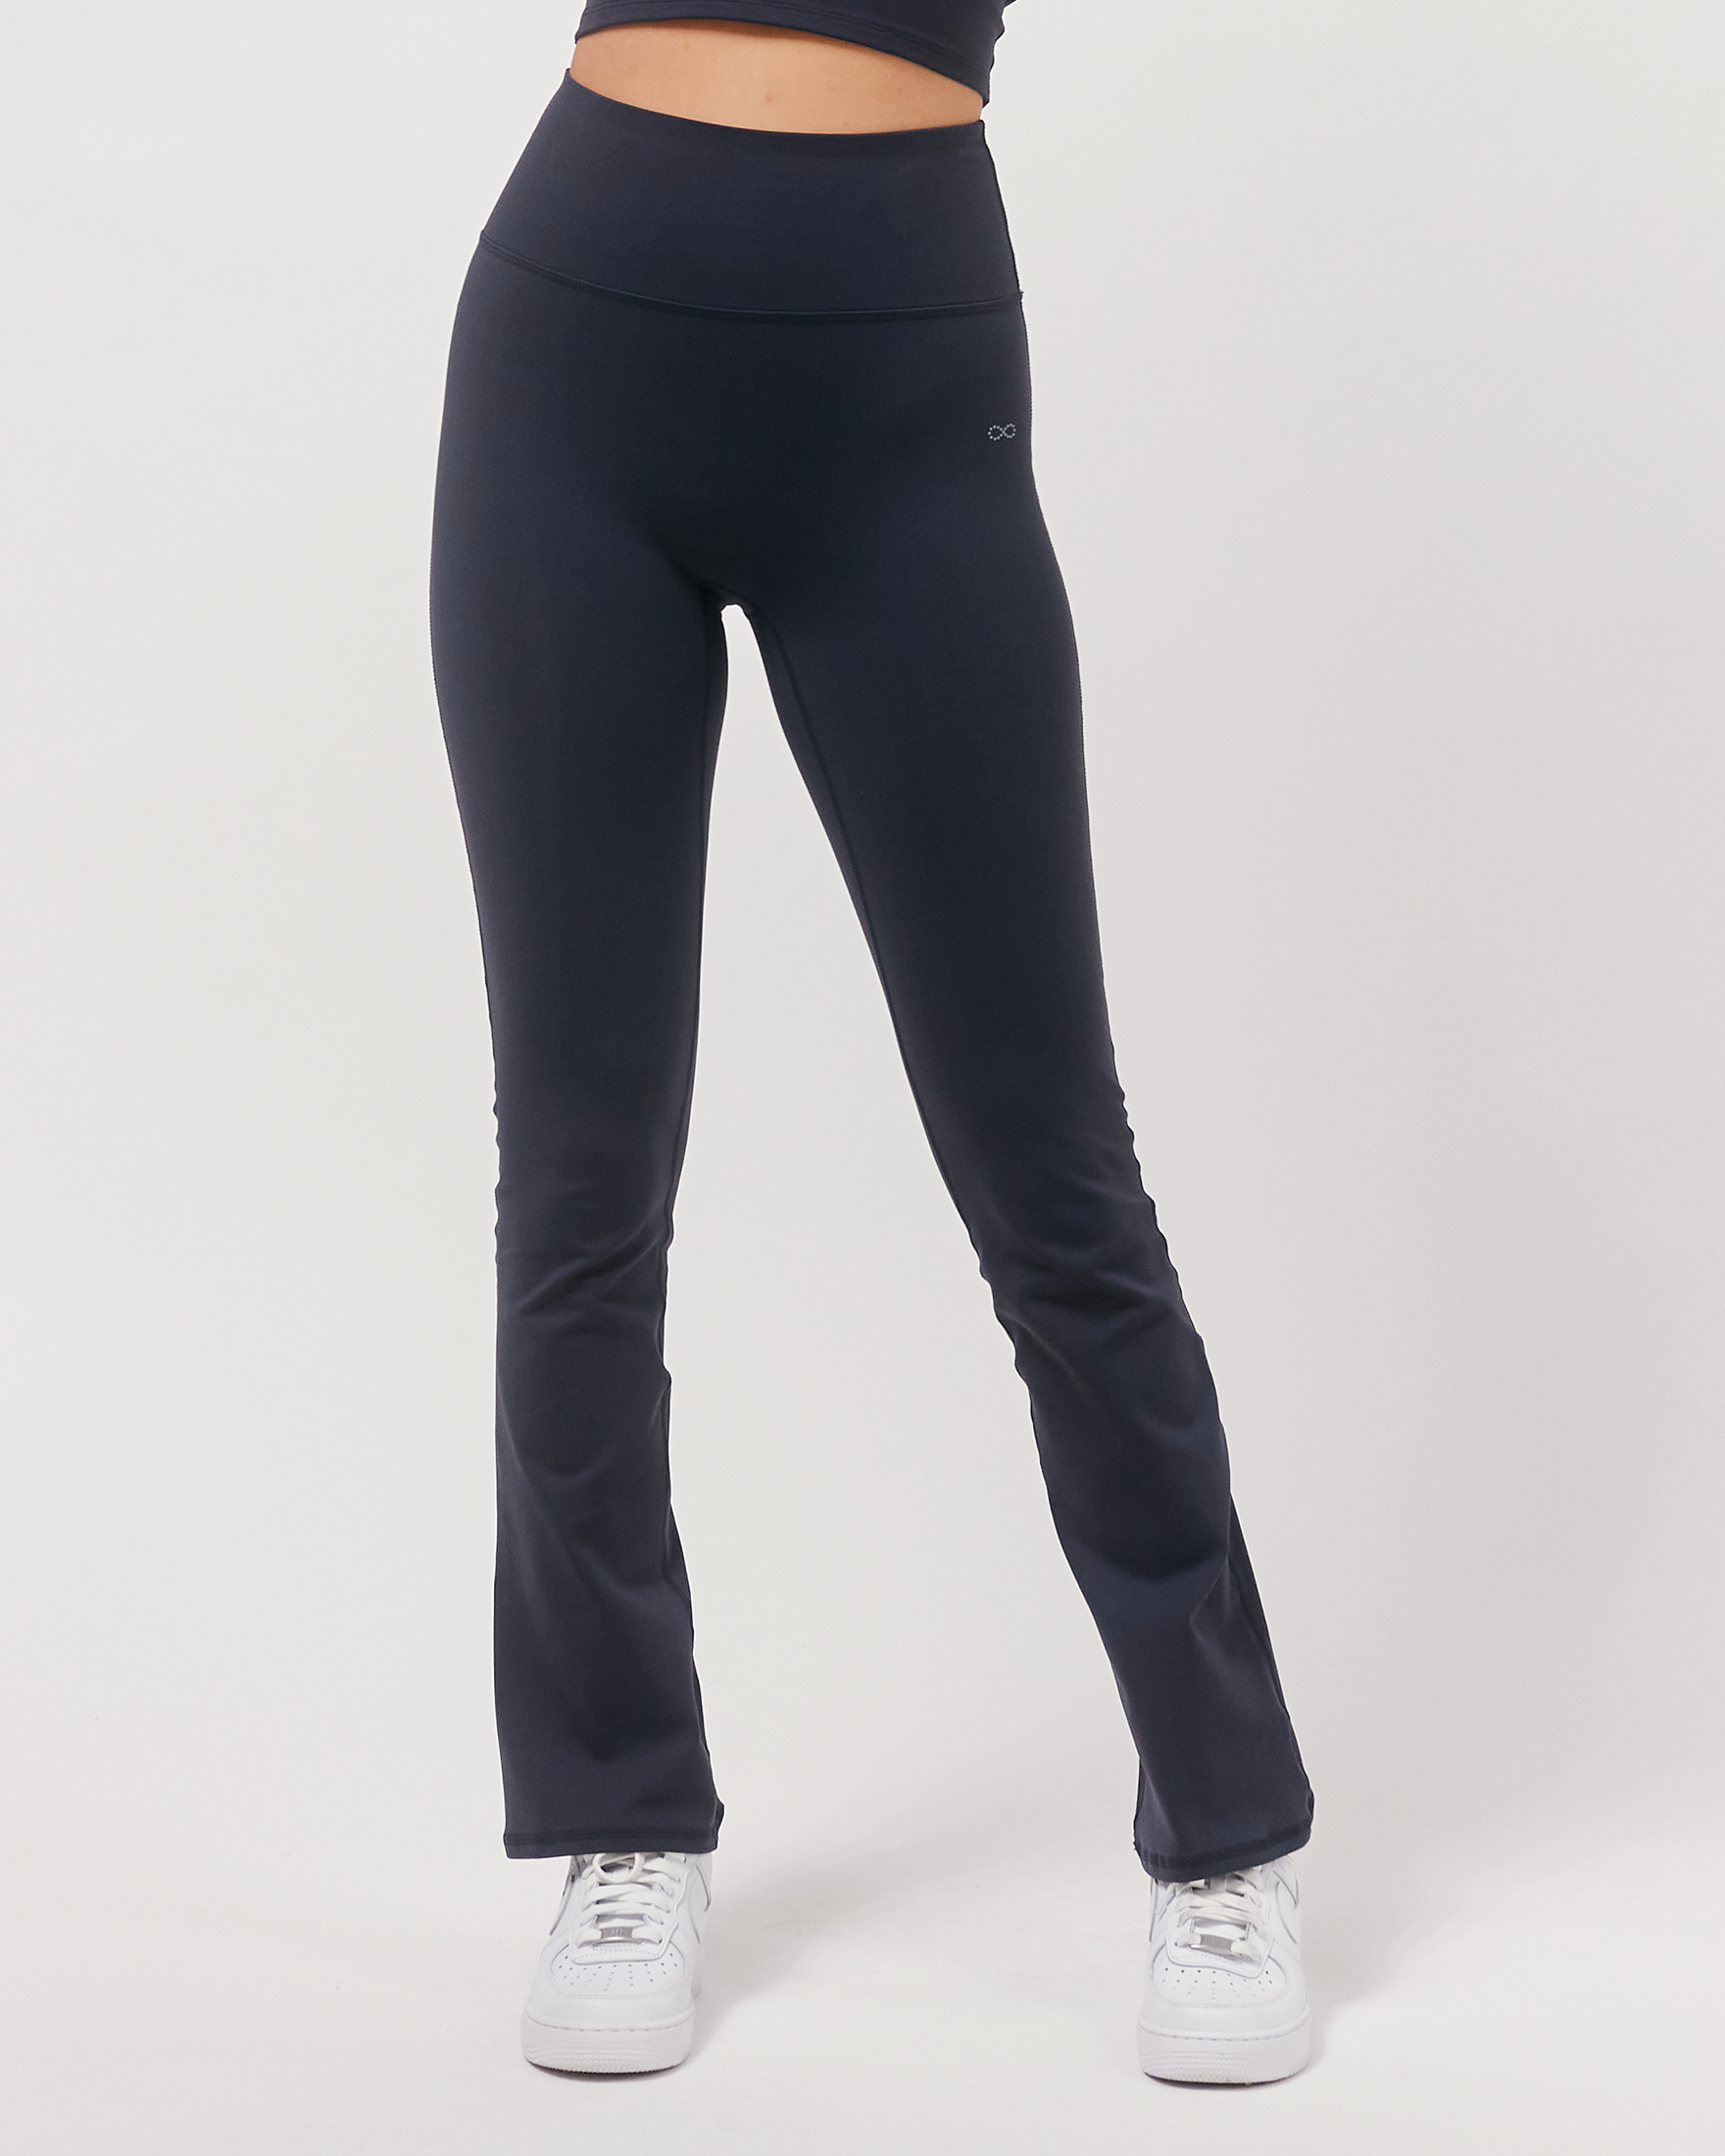 Women High Waist Fold Over Flared Yoga Pants Stretchy Workout Bootcut  Leggings | eBay